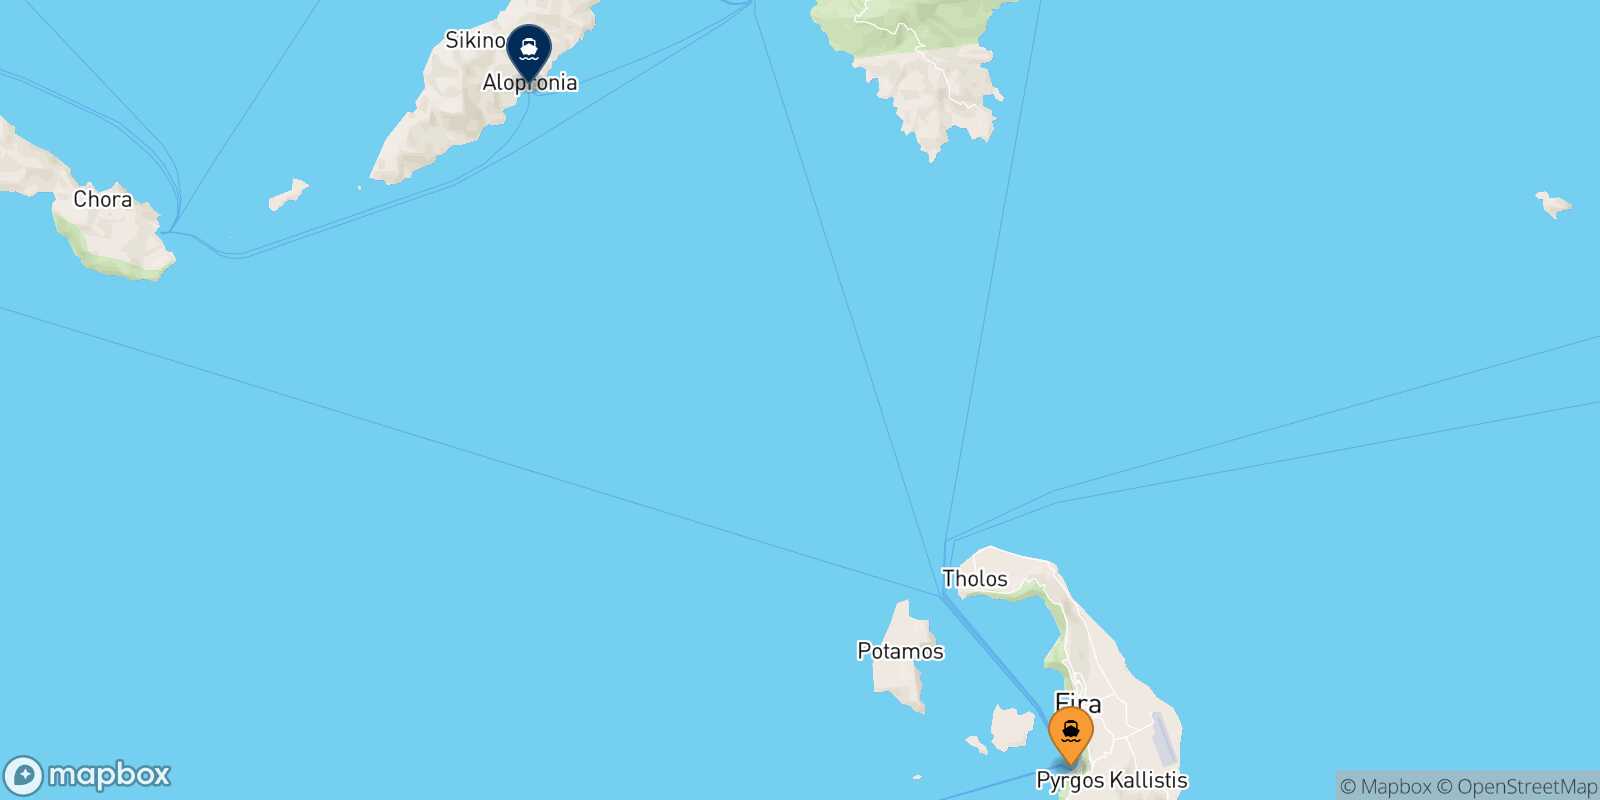 Thira (Santorini) Sikinos route map